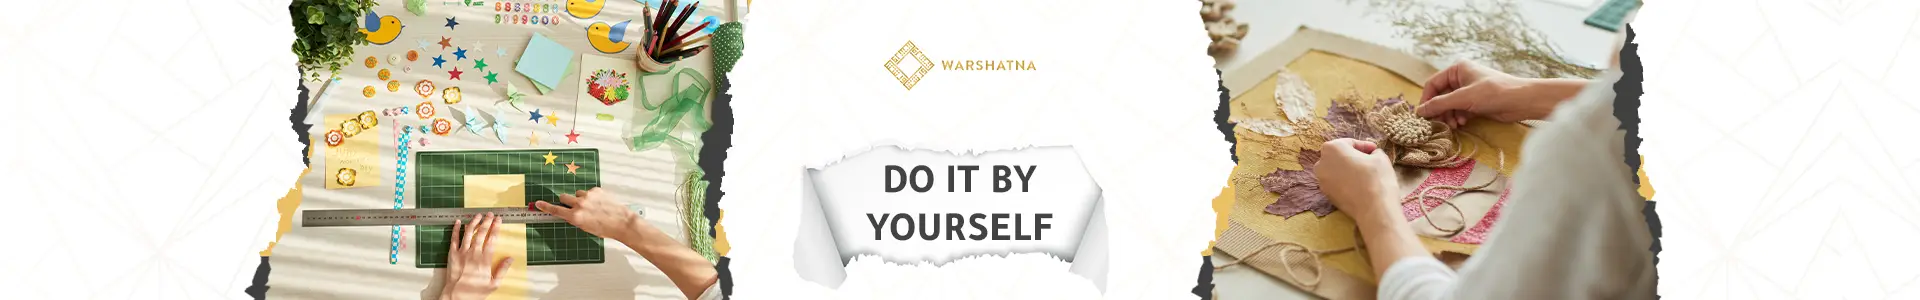 Do It Yourself-/img/home-banners/banner-en.webp